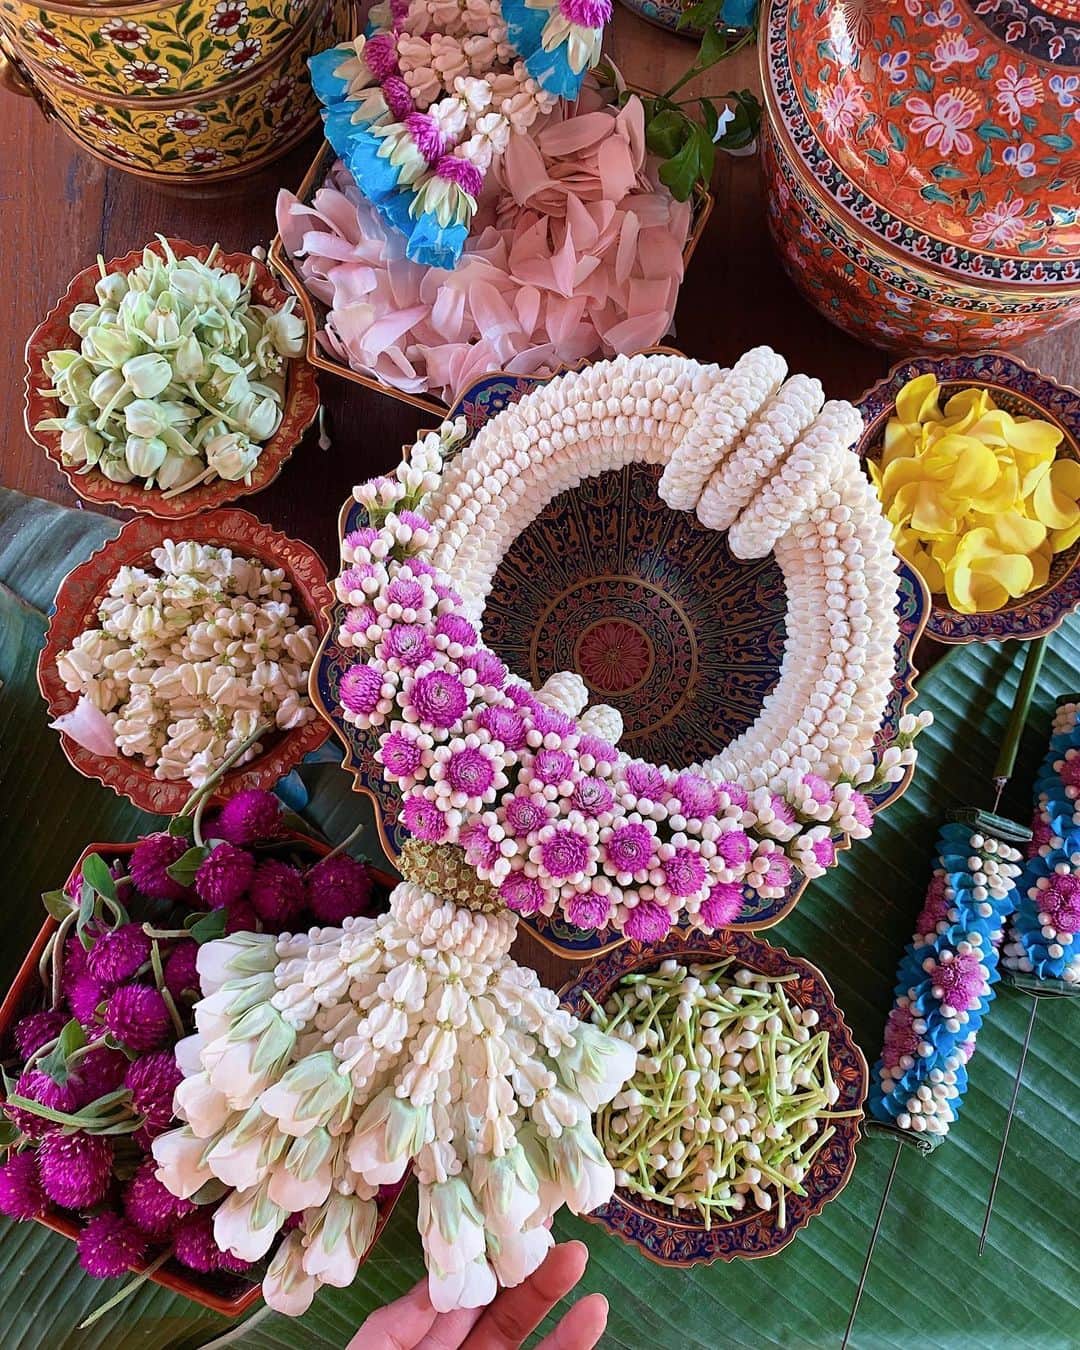 Amata Chittaseneeさんのインスタグラム写真 - (Amata ChittaseneeInstagram)「Thainess x Thai flower garland  โคตรไทย x พวงมาลัย :ทททภาคกลาง #pearypieamazingThailand @Aey_nitch  #พวงมาลัยภาณุมาศ  Phuang Malai/floral garlands, if you have ever been to Thailand, you see floral garlands everywhere! Phuang Malai is a unique symbol of what has been described as “Thainess”-presented as a symbol of welcome, respect and good health to honoured guests, relatives and loved ones-given as a gift or offering. Sometimes people keep their Phuang Malai as a sign of good luck in the hope that it will bring them good fortune. It is one of the most beautiful traditions that we have carried from the past and continue to be an essential and welcome symbol of what it means to be in Thailand, which remains in the hearts of all who have the privileged fortune to experience this unique and ancient culture. มาลัยชายเดียว หมายถึง มาลัยที่มีลักษณะเป็นพวงกลม มีอุบะห้อยเป็นชายเพียงพวงเดียว อาจเรียกว่า พวงมาลัย คือพวงดอกไม้ประดิษฐ์ ที่นำดอกไม้ ใบไม้ เช่น กลีบดอกกุหลาบมอญ ดอกพุด ดอกรัก ดอกมะลิ ดอกบานไม่รู้โรย ดอกเล็บมือนาง หงอนไก่  เฟื่องฟ้า มาร้อย 🌸🌼 นำมาใช้กราบไหว้พระและสิ่งศักดิ์สิทธิ์ ไหว้ บิดามารดา ใช้เพื่อแสดงความยินดีหรือต้อนรับแขก มอบให้บุคคลผู้มีชื่อเสียง เพื่อเป็นการรับขวัญ และตามเทศกาลต่างๆ **บรรพบุรุษของไทยมีชื่อเสียงในงานด้านศิลปะการประดิษฐ์อย่างมากมายโดยเฉพาะการประดิษฐ์ตกแต่งพวงดอกไม้ ใบ้ไม้และผลไม้  ในสมัยสุโขทัย รัชสมัยของพระมหาธรรมราชาที่ 1 ท้าวศรีจุฬาลักษณ์ ผู้ที่มีความสามารถในงานด้านฝีมือในการประดิษฐ์ดอกไม้สดเป็นเลิศ และยังได้เอาผลไม้ มาทําการ แกะสลักตกแต่งประกอบ ในสมัยรัตนโกสินทร์ทุกรัชกาล งานฝีมือ การประดิษฐ์ดอกไม้ เป็นที่นิยมนํามาใช้ในงานต่างโดยเฉพาะงานพิธีต่าง ๆ ในสมัยรัชกาลที่ 5 นิยมการทําดอกไม้เป็นอย่างยิ่ง สมเด็จพระพันปีหลวง ได้ทรงคิดร้อยมาลัยด้วยดอกไม้ต่างๆและใช้ใบไม้แทรกนำทำให้มีลวดลายต่างๆกันอย่างงดงามและพลิกแพลงทำรูปต่างๆกัน การร้อยมาลัย ได้มีการวิวัฒนาการก้าวหน้ากว่าเดิมเป็นต้นมาหลายรูปแบบทำให้เห็นได้ว่า คนไทยมีความประณีตในการใช้ดอกไม้โดยนำมาประดับตกแต่งในพิธีกรรมต่างๆทั้งในด้านศาสนา พิธีกรรมเกี่ยวกับชีวิตและงานรื่นเริง💐 (ขอบคุณความรู้ใหม่จากโลกทางอินเทอร์เน็ตค่ะ)」5月22日 9時34分 - pearypie